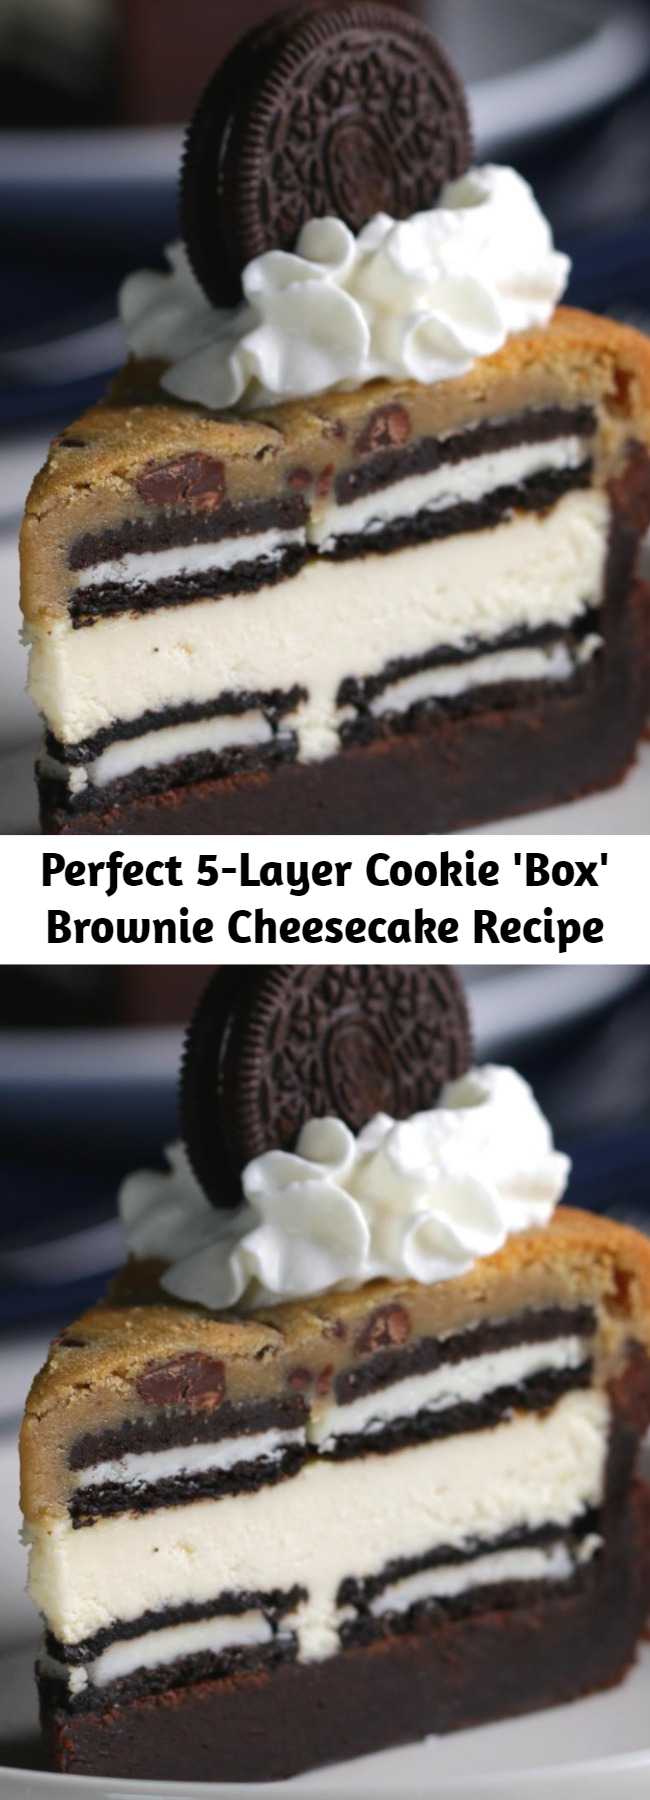 Perfect 5-Layer Cookie 'Box' Brownie Cheesecake Recipe - Tastes amazing!